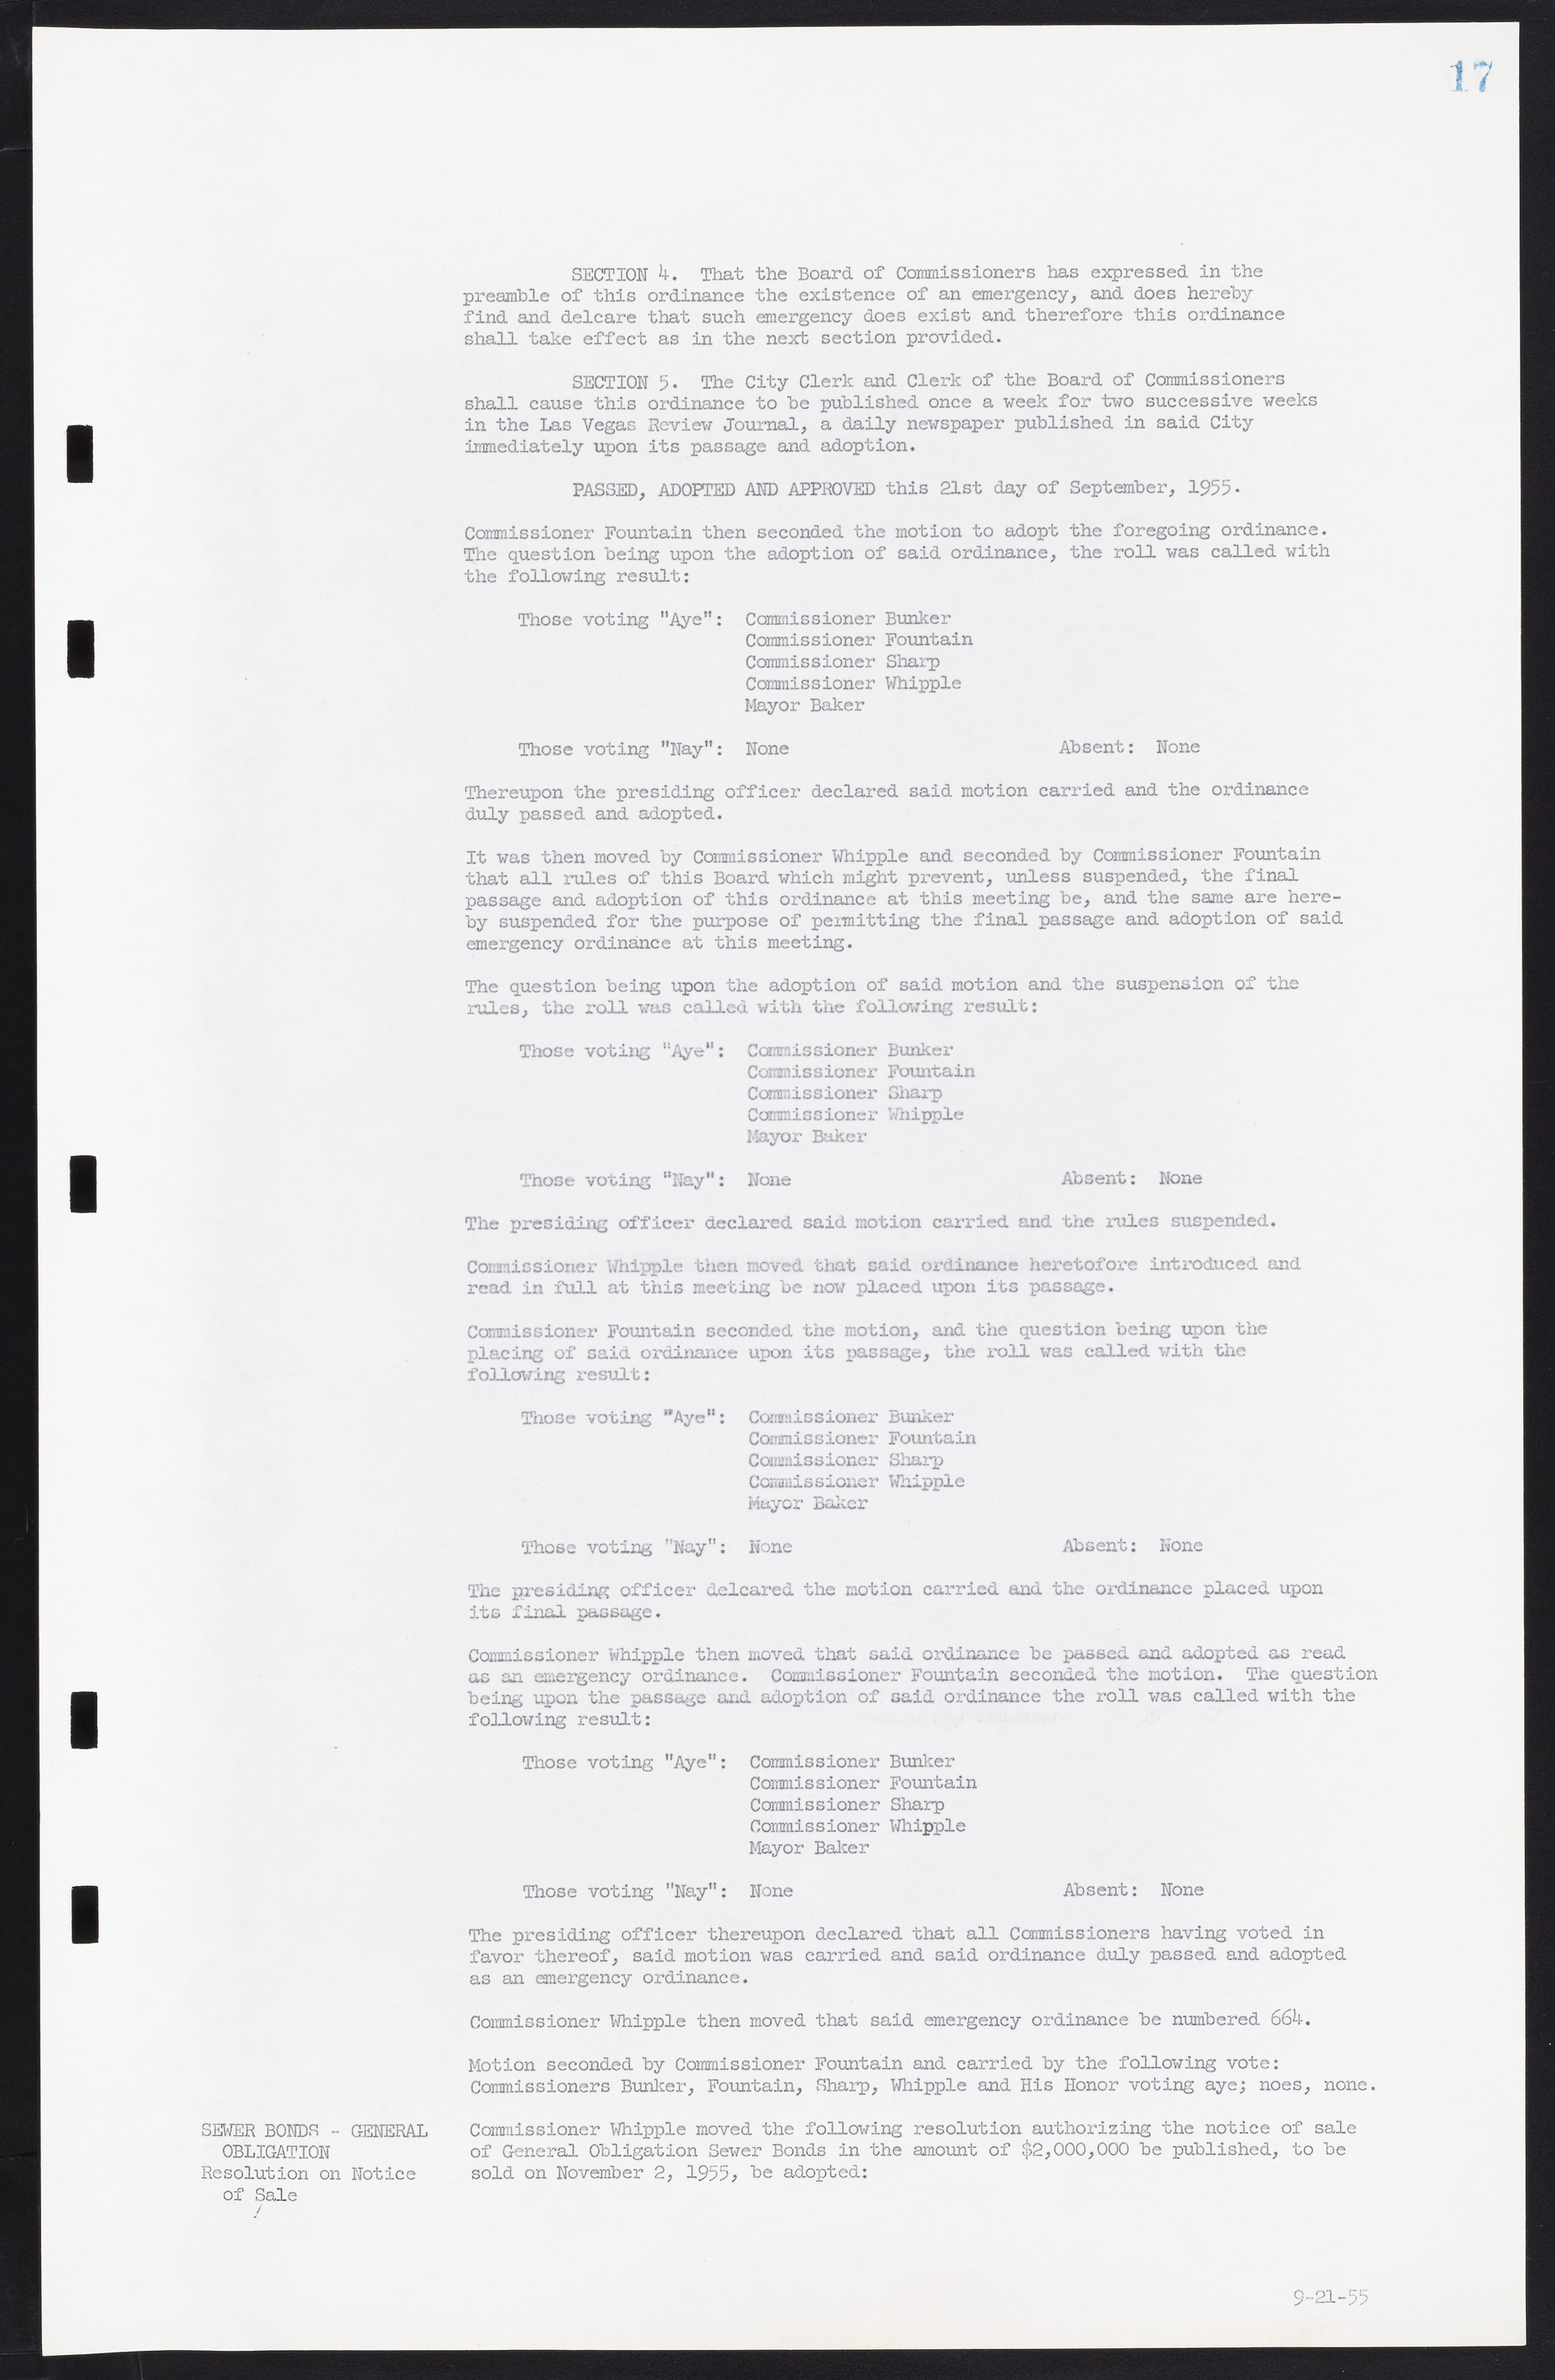 Las Vegas City Commission Minutes, September 21, 1955 to November 20, 1957, lvc000010-23